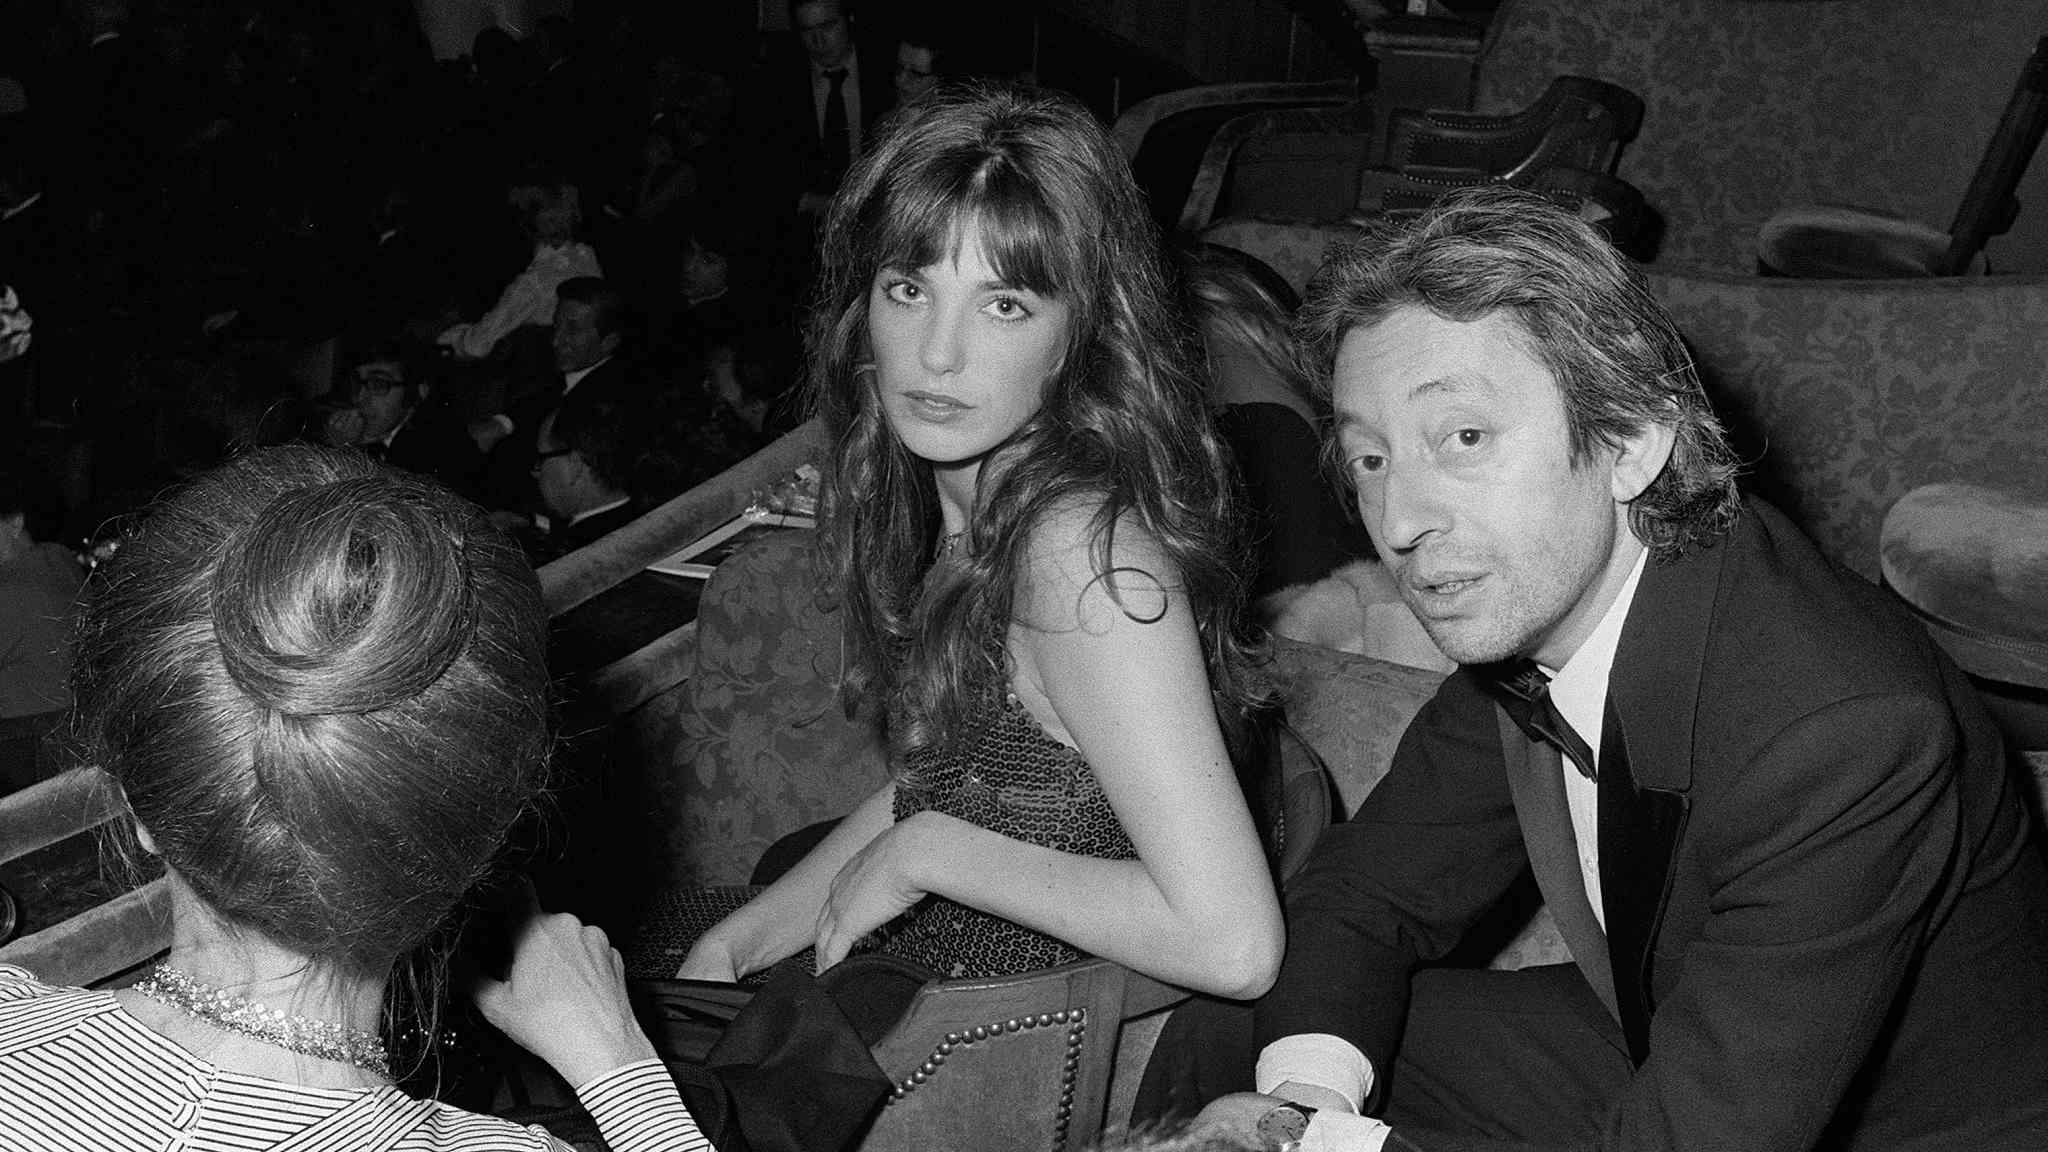 Jane Birkin recalls memories as she brings back Gainsbourg - CGTN